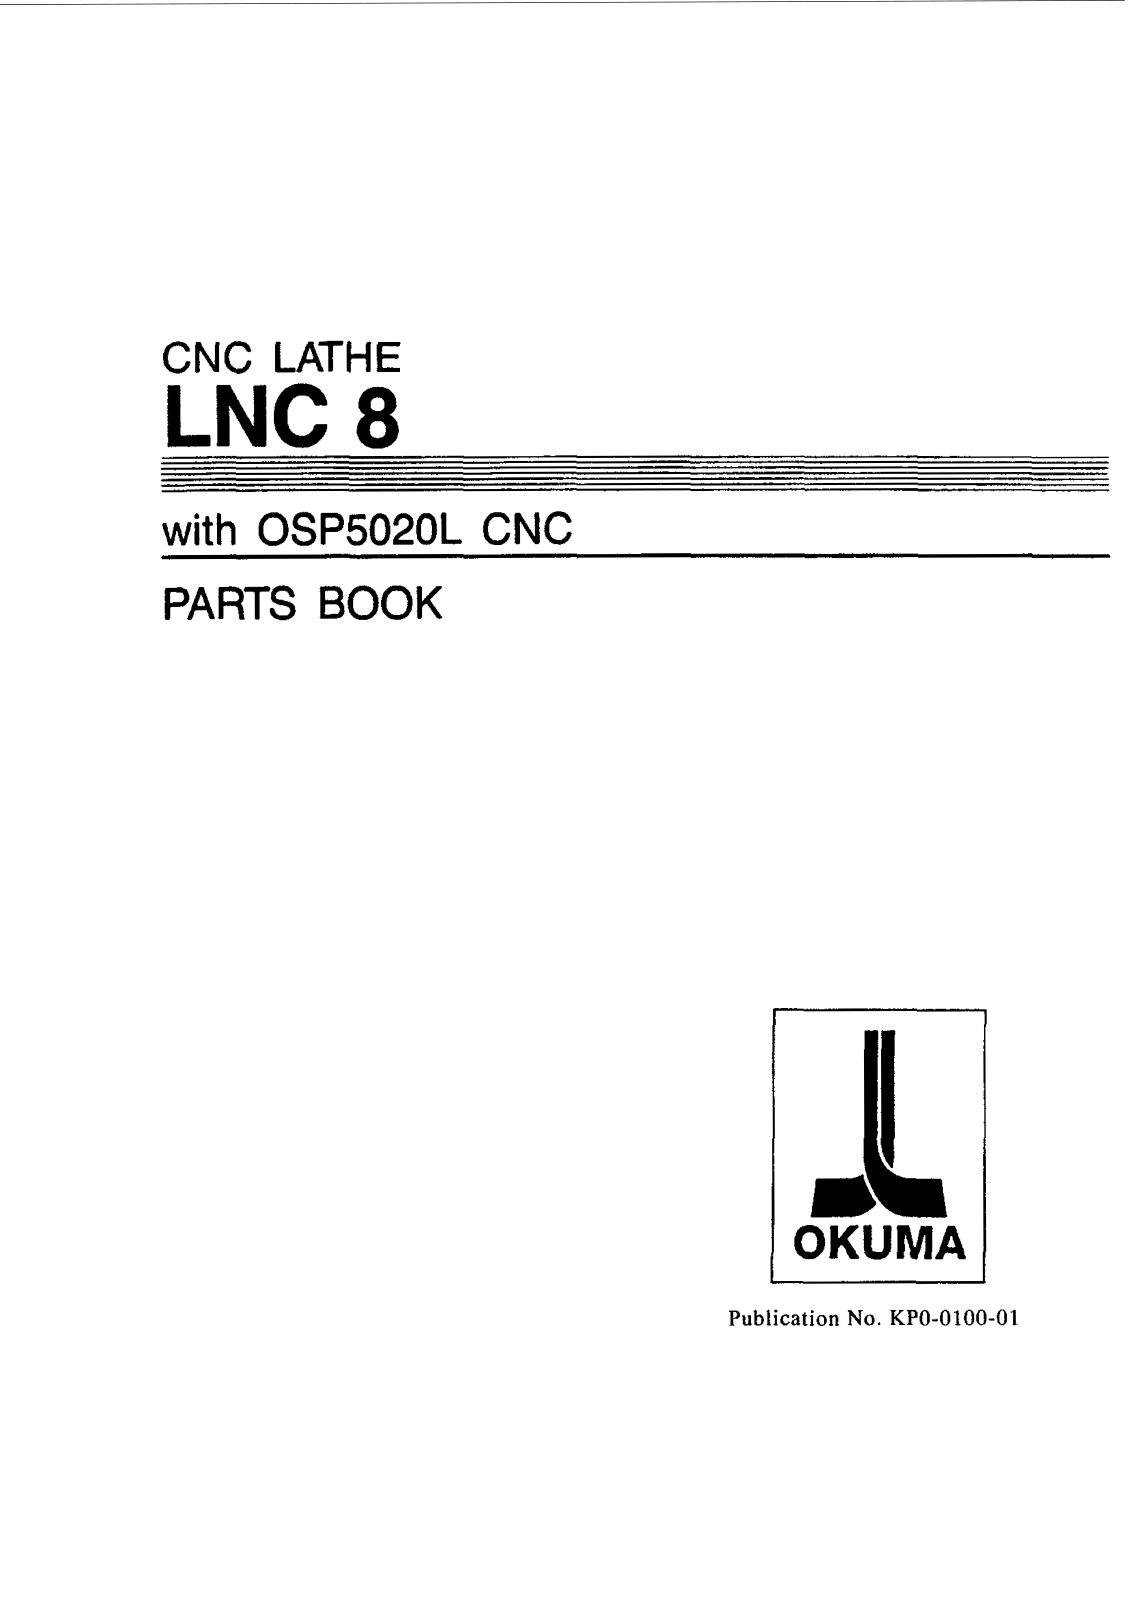 okuma OSP5020L Parts Book